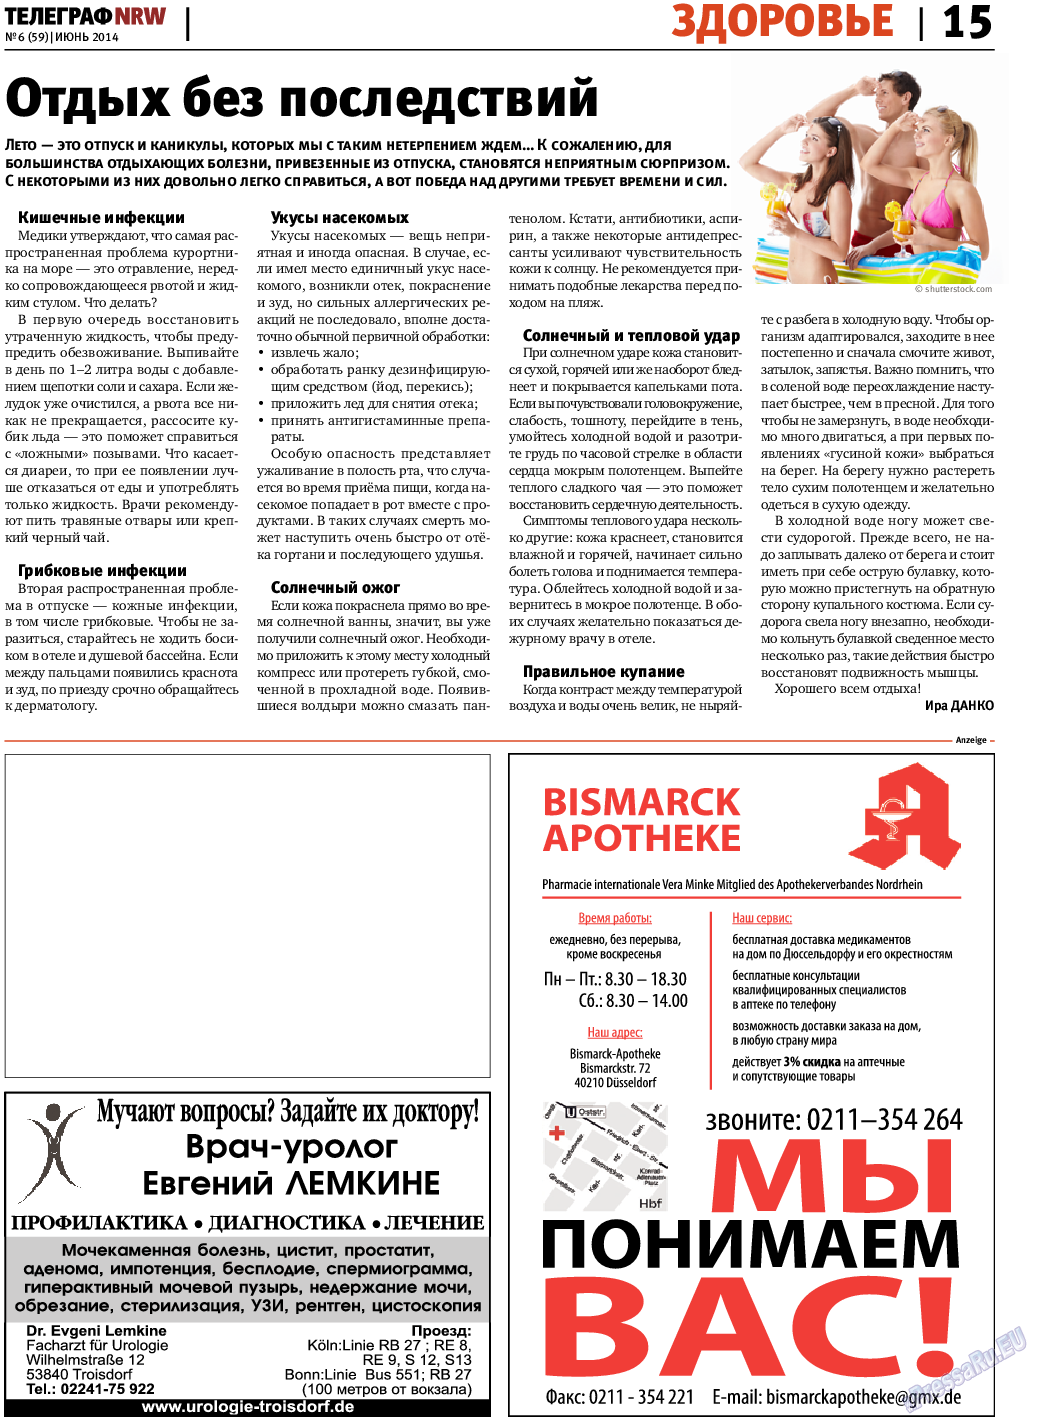 Телеграф NRW, газета. 2014 №6 стр.15